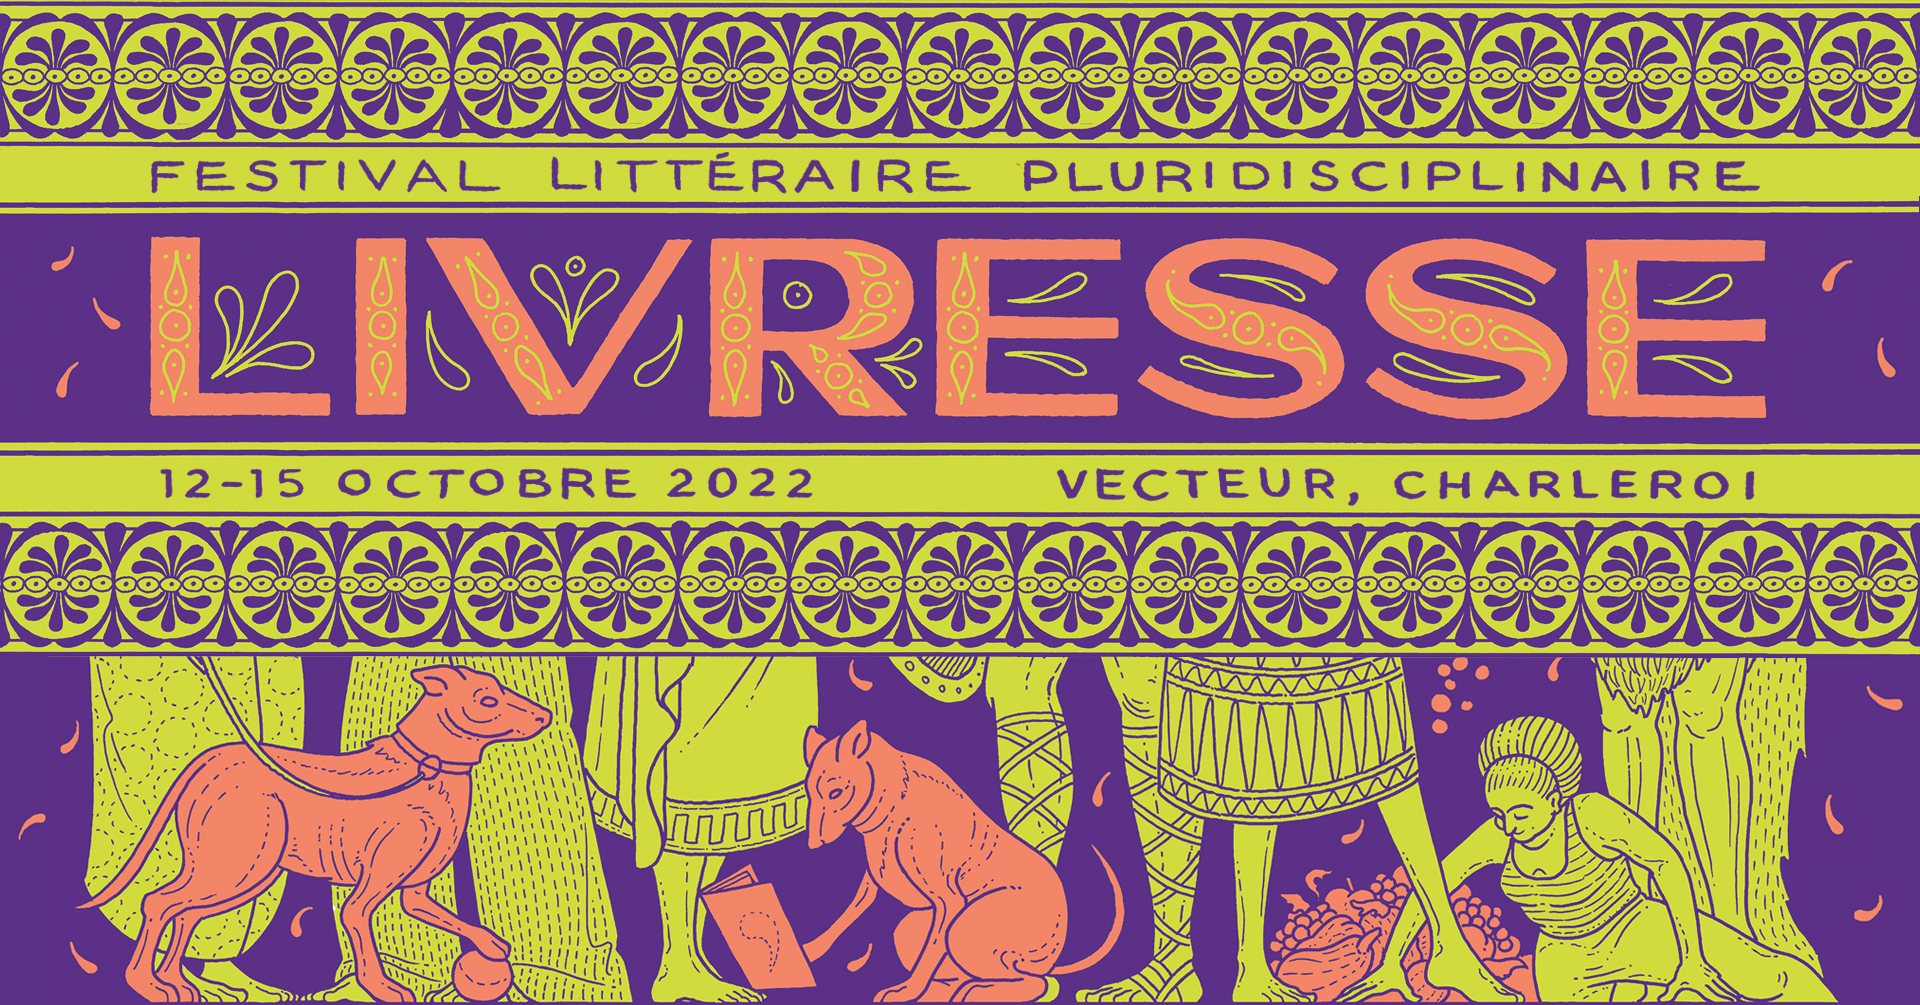 Livresse 2022 | Festival littéraire pluridisciplinaire